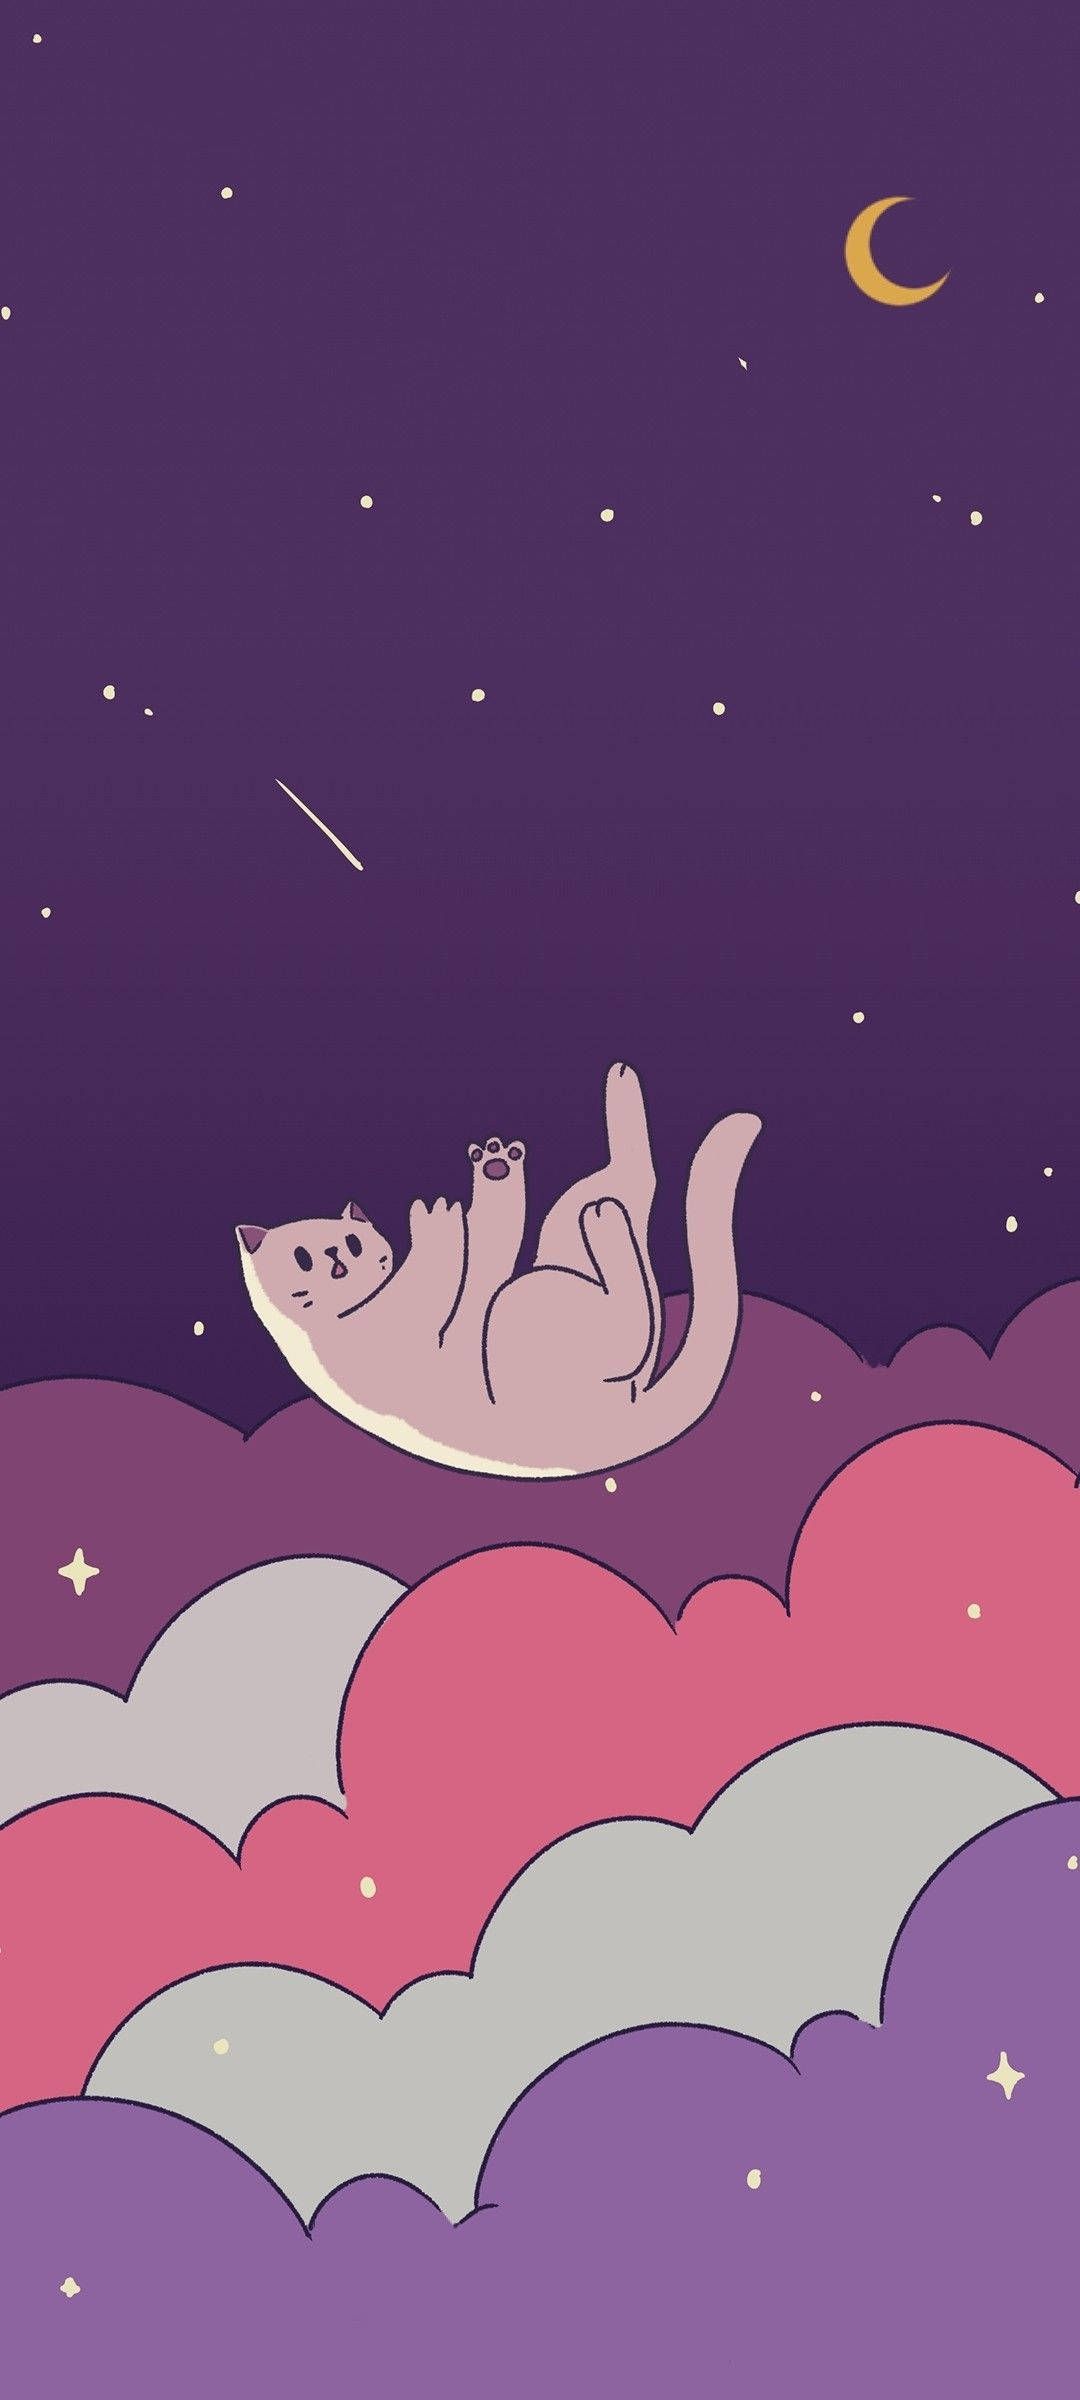 Download Falling Cat Soft Aesthetic Art Wallpaper